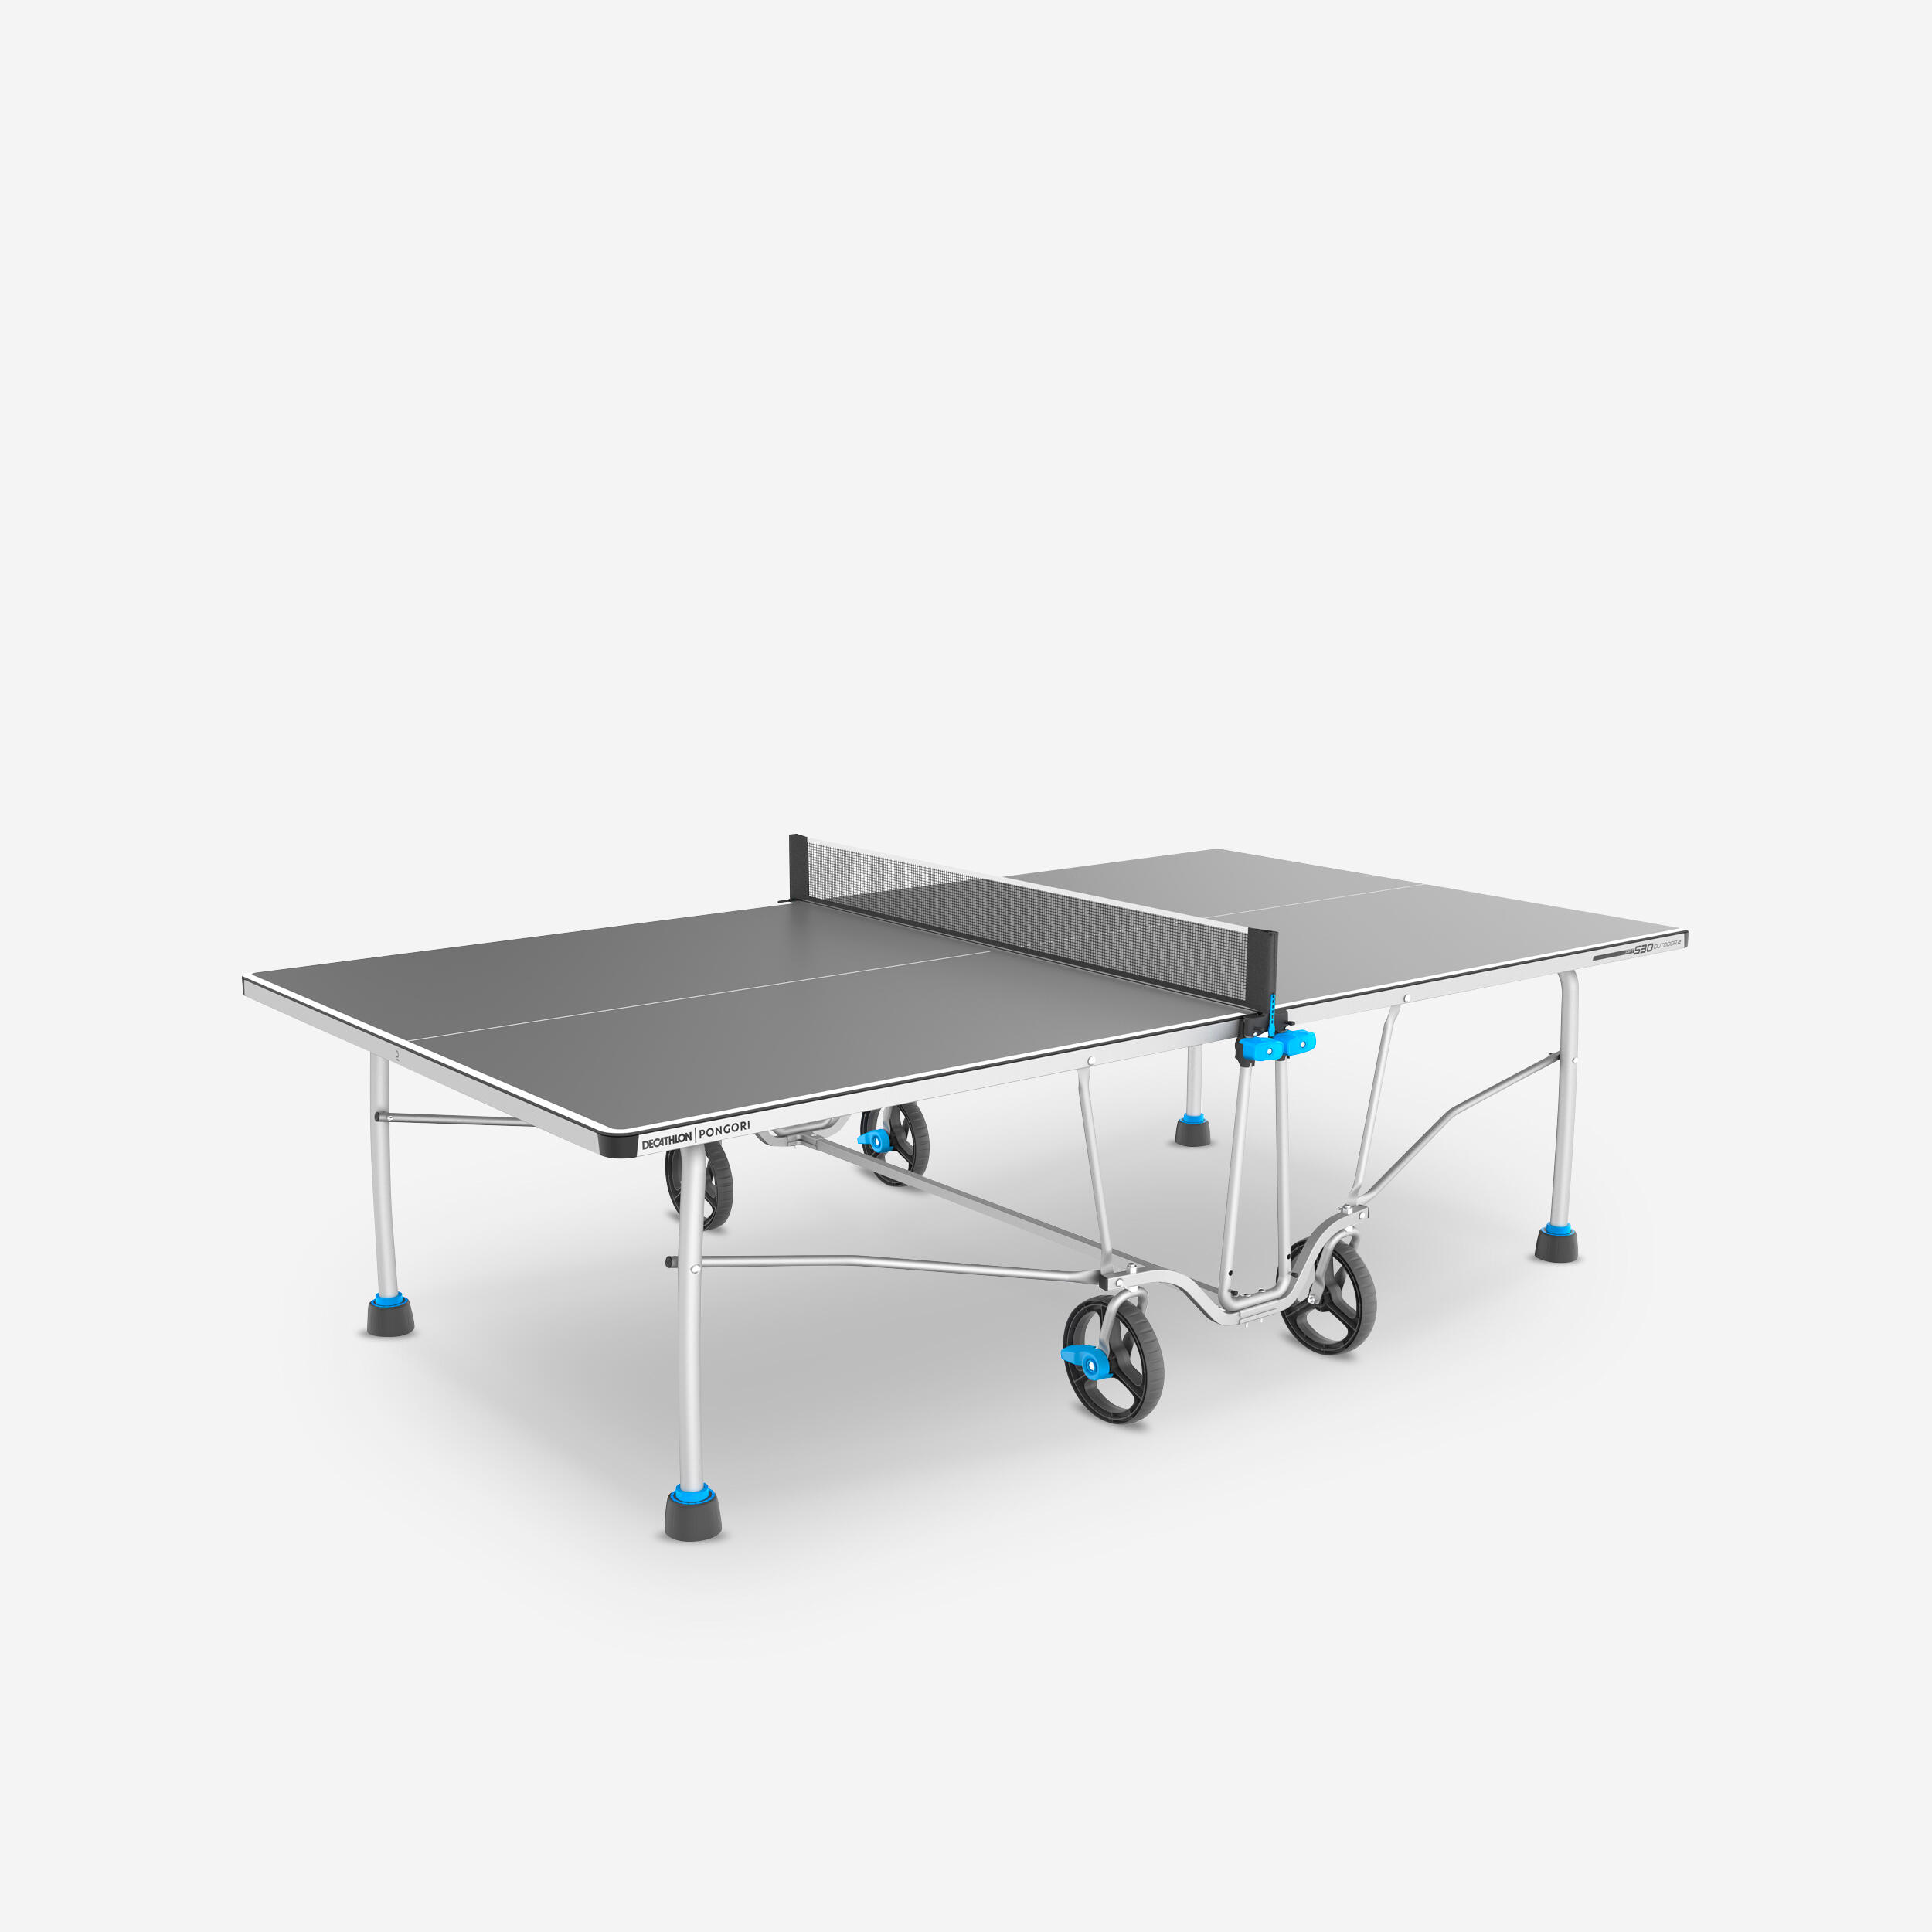 PONGORI Outdoor Table Tennis Table PPT 530.2 - Grey